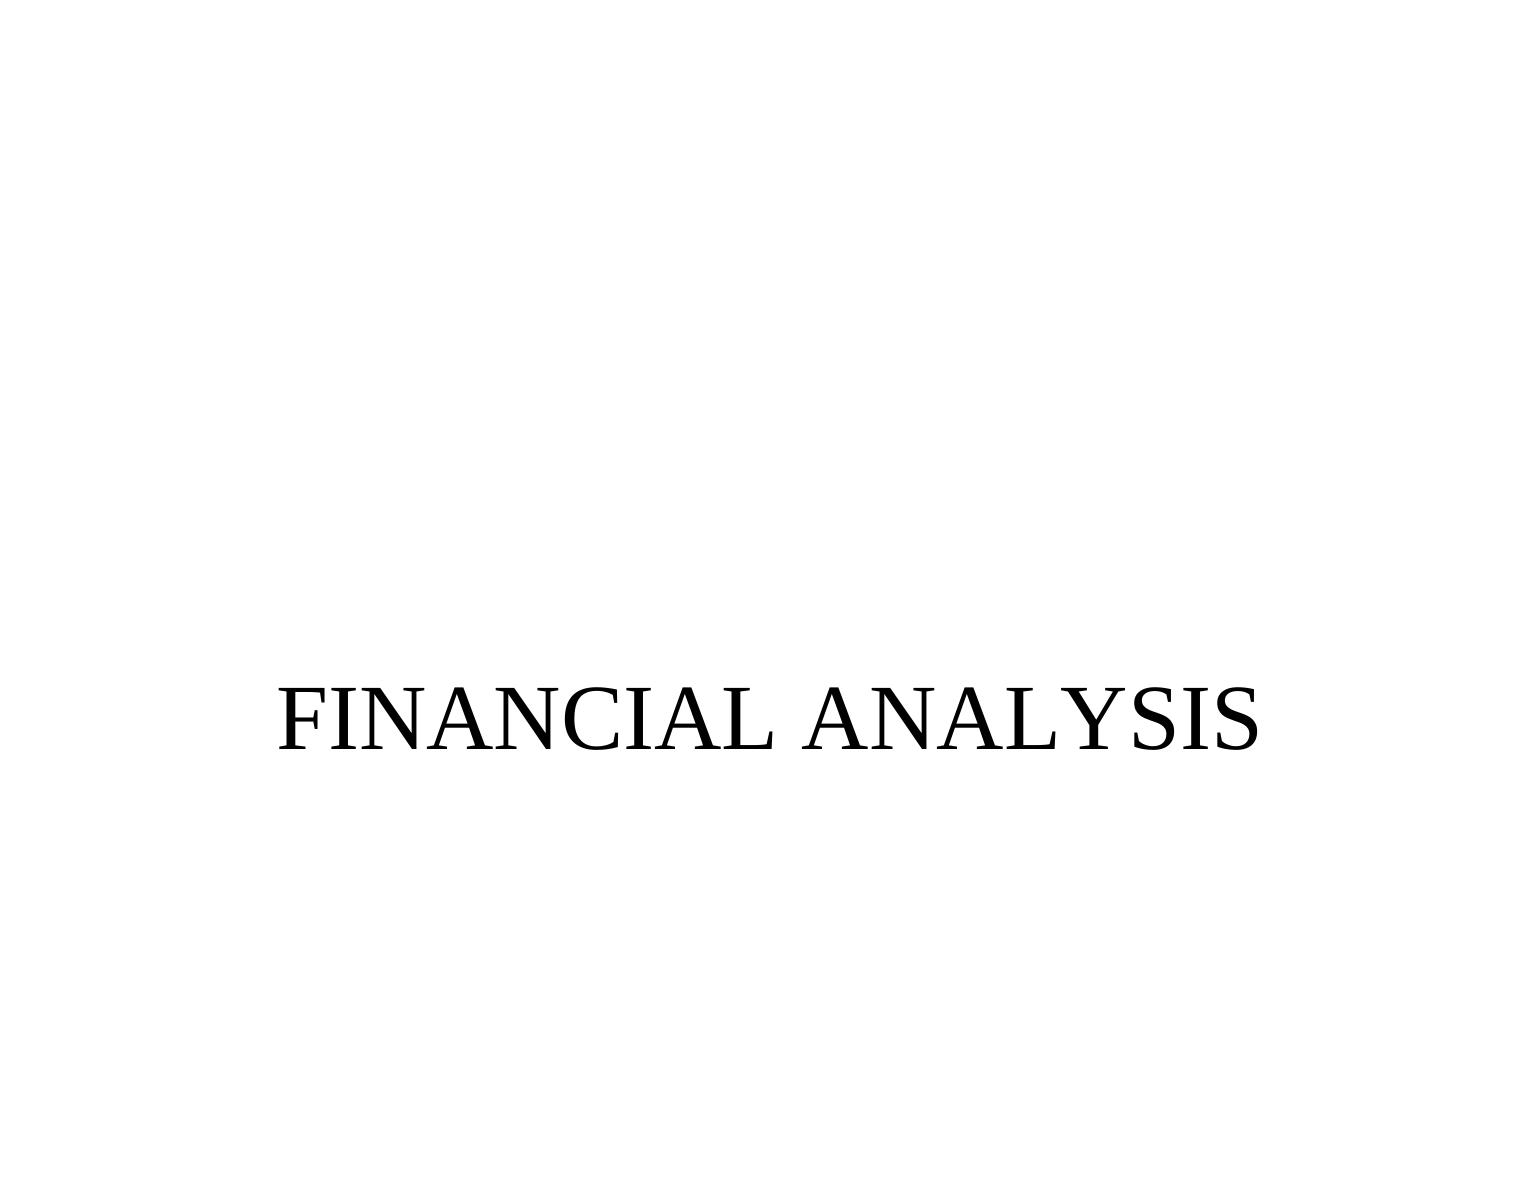 Research Report on Financial Analysis of JB Hi Fi Ltd_1